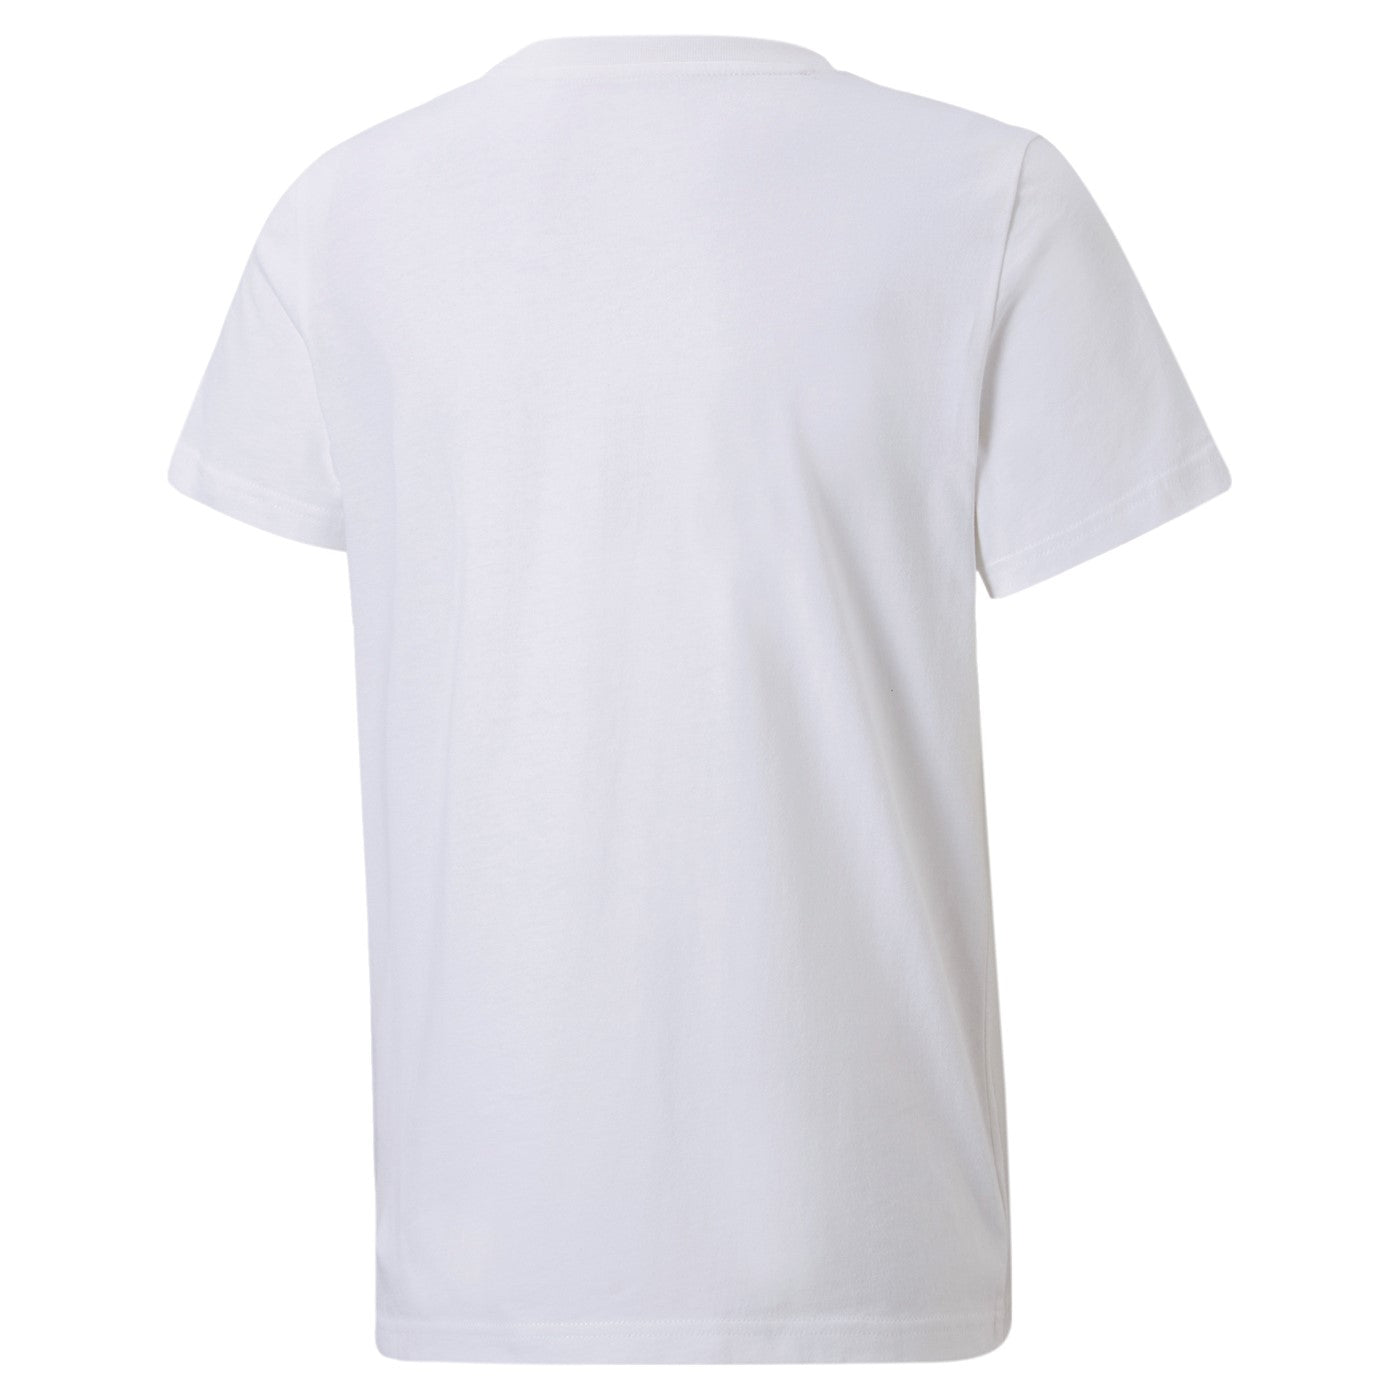 Puma T-shirt boy Active Sports Graphic 846993 02 white